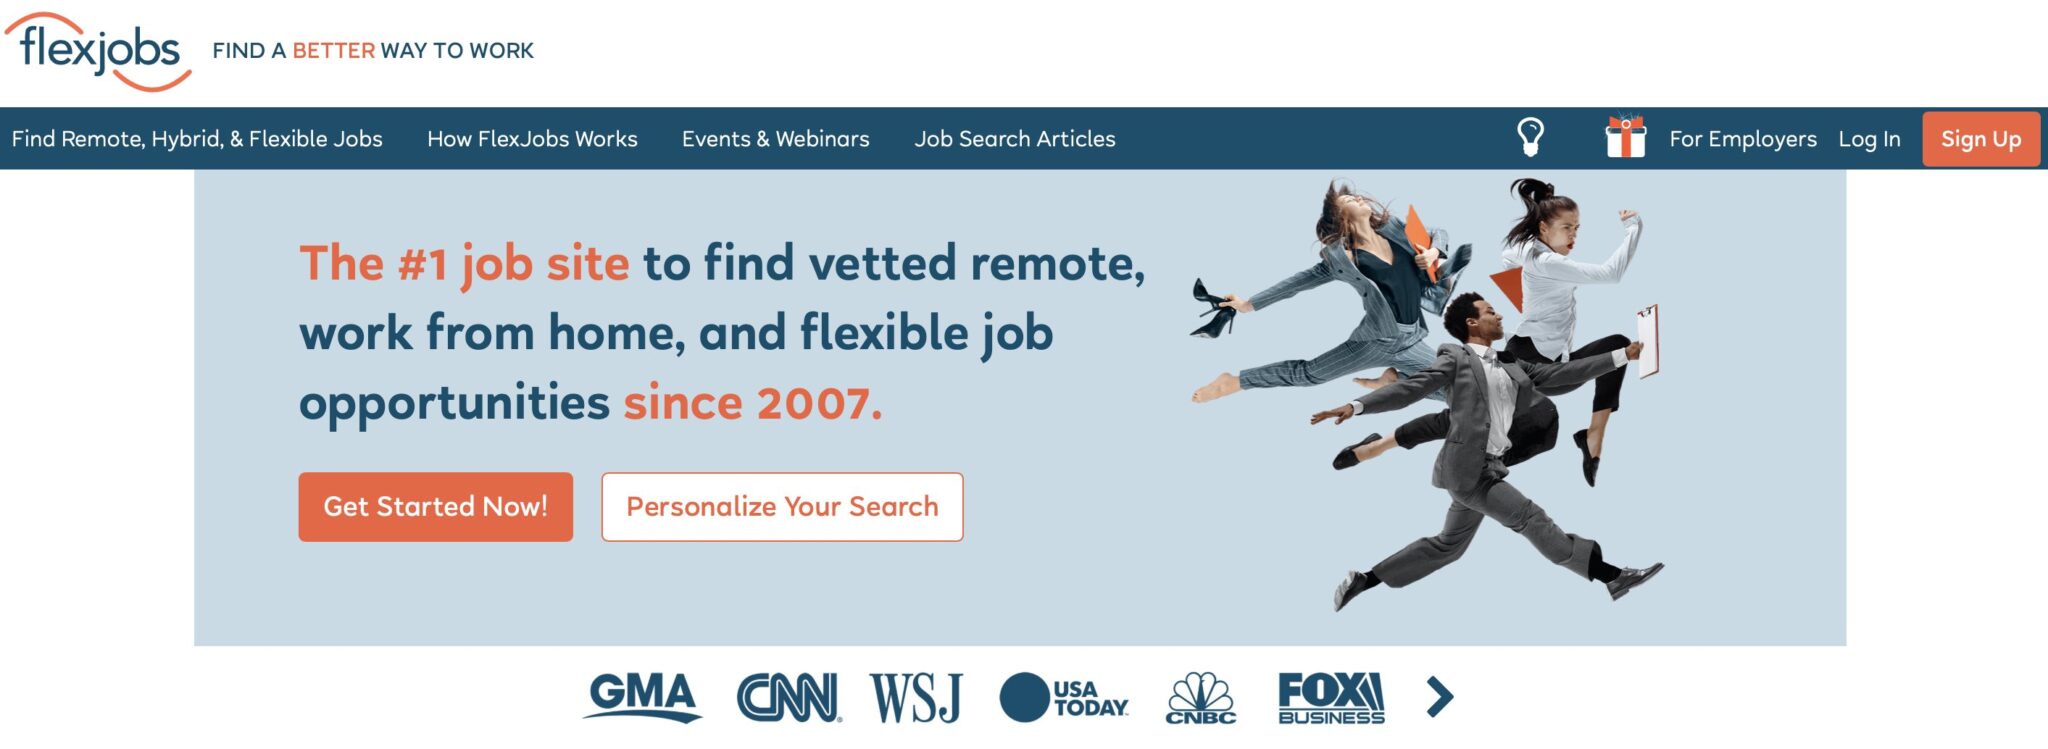 flexjobs homepage